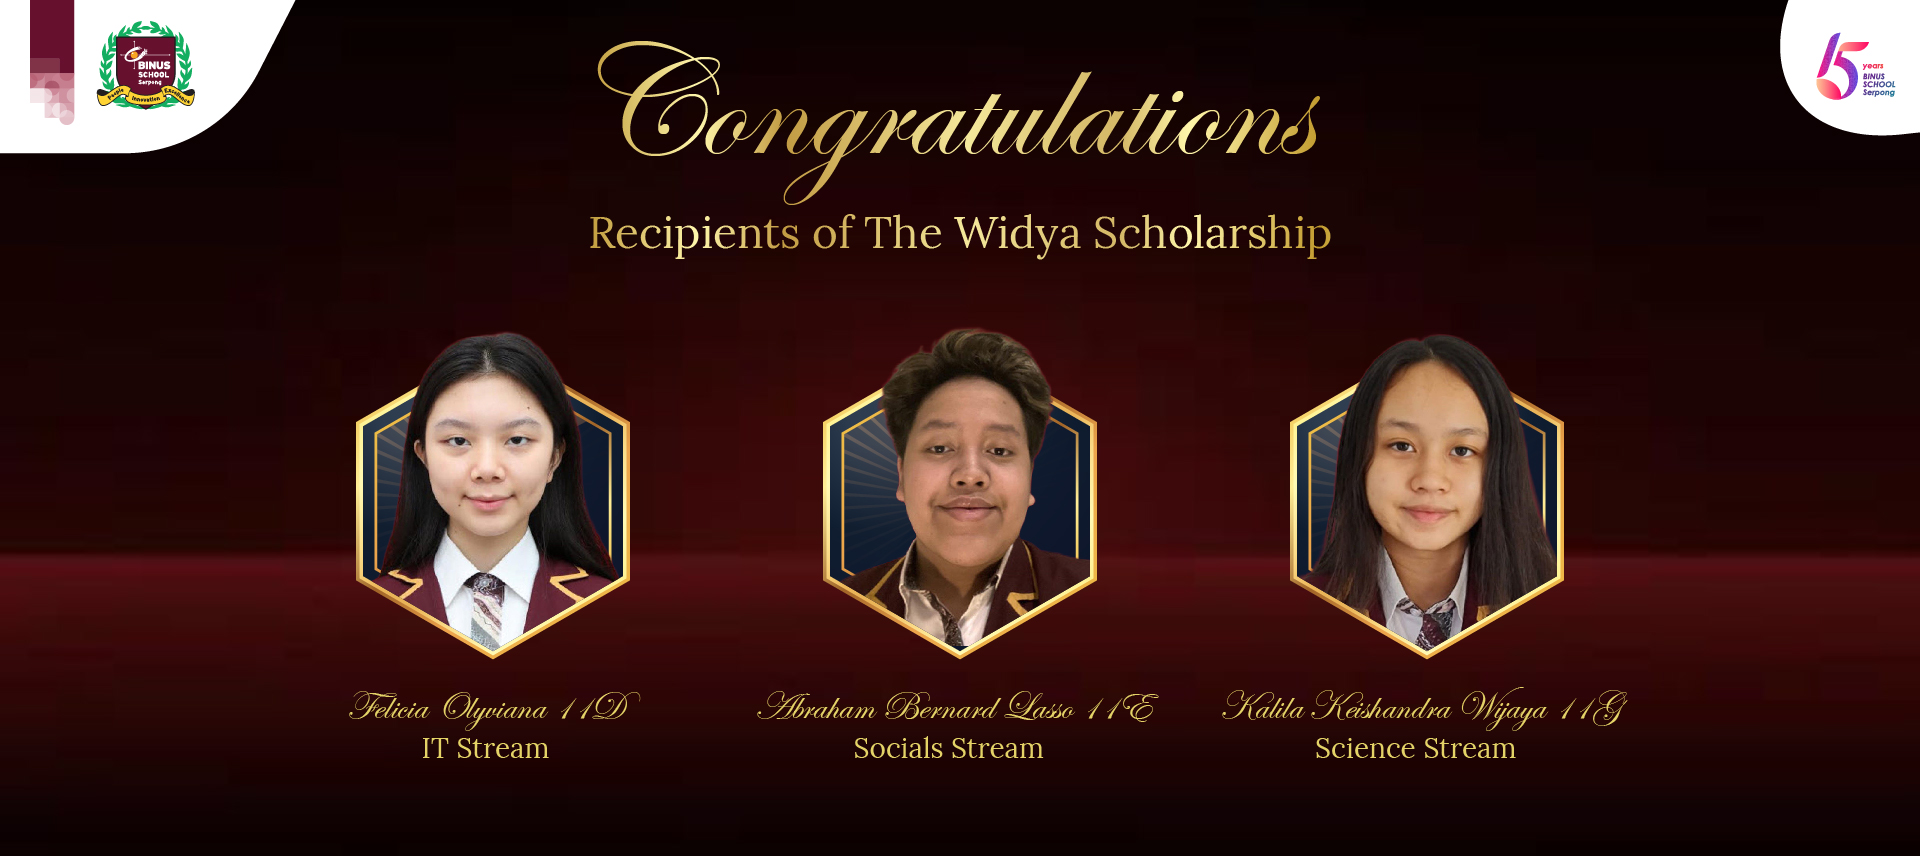 The Widya Scholarship